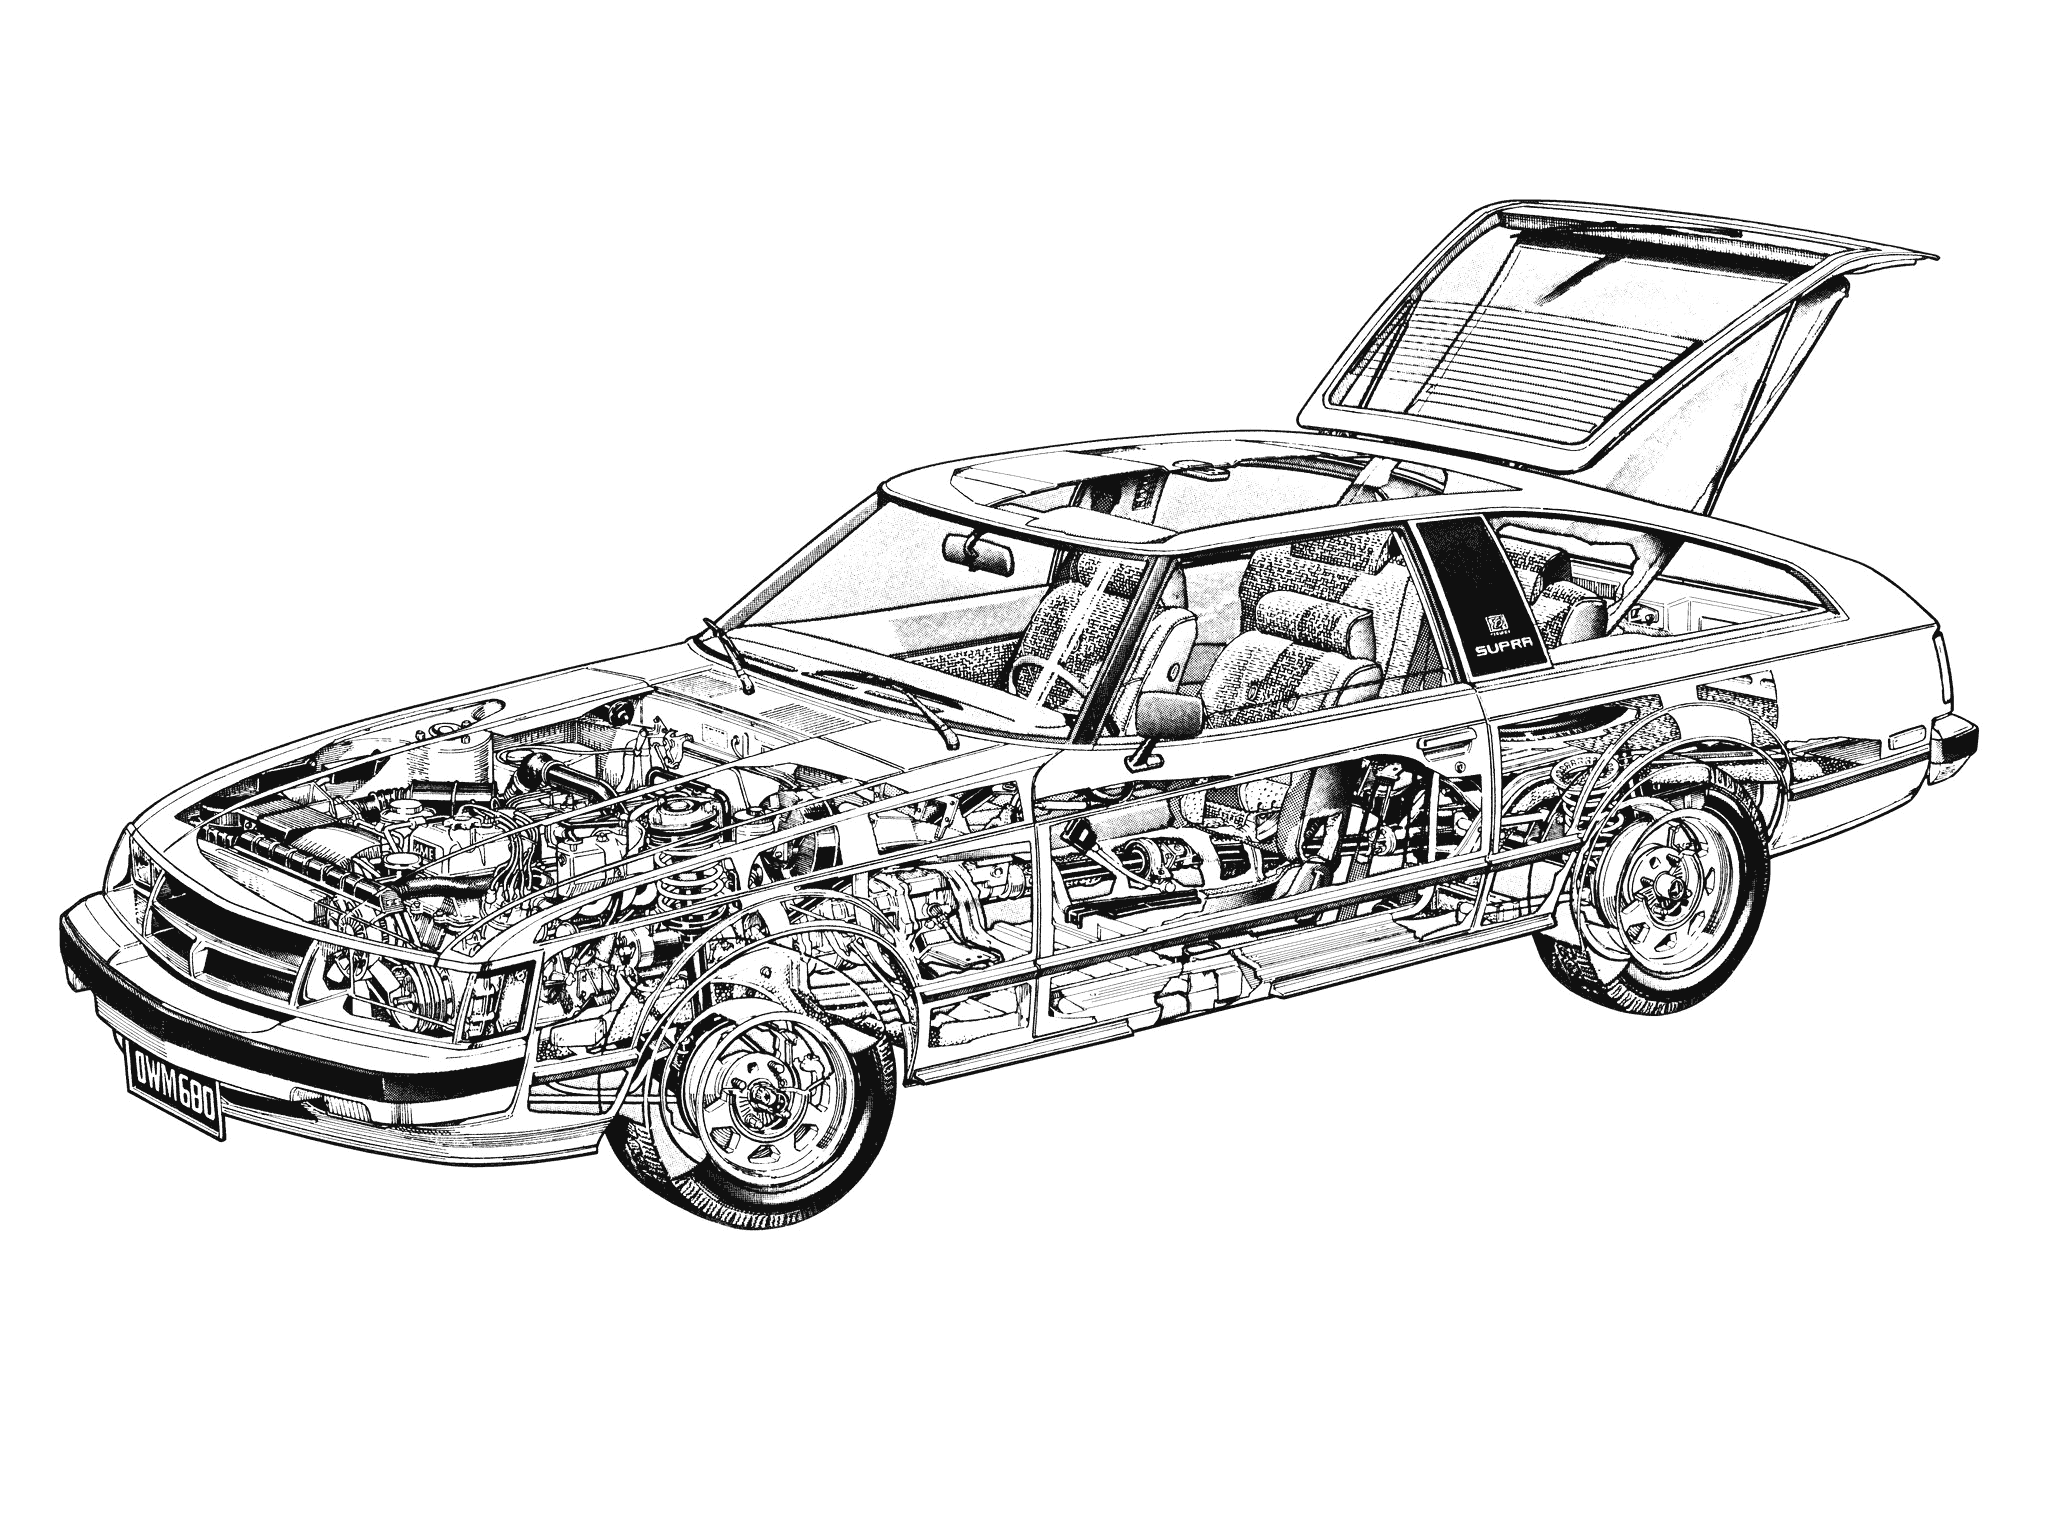 Toyota Celica Supra cutaway drawing